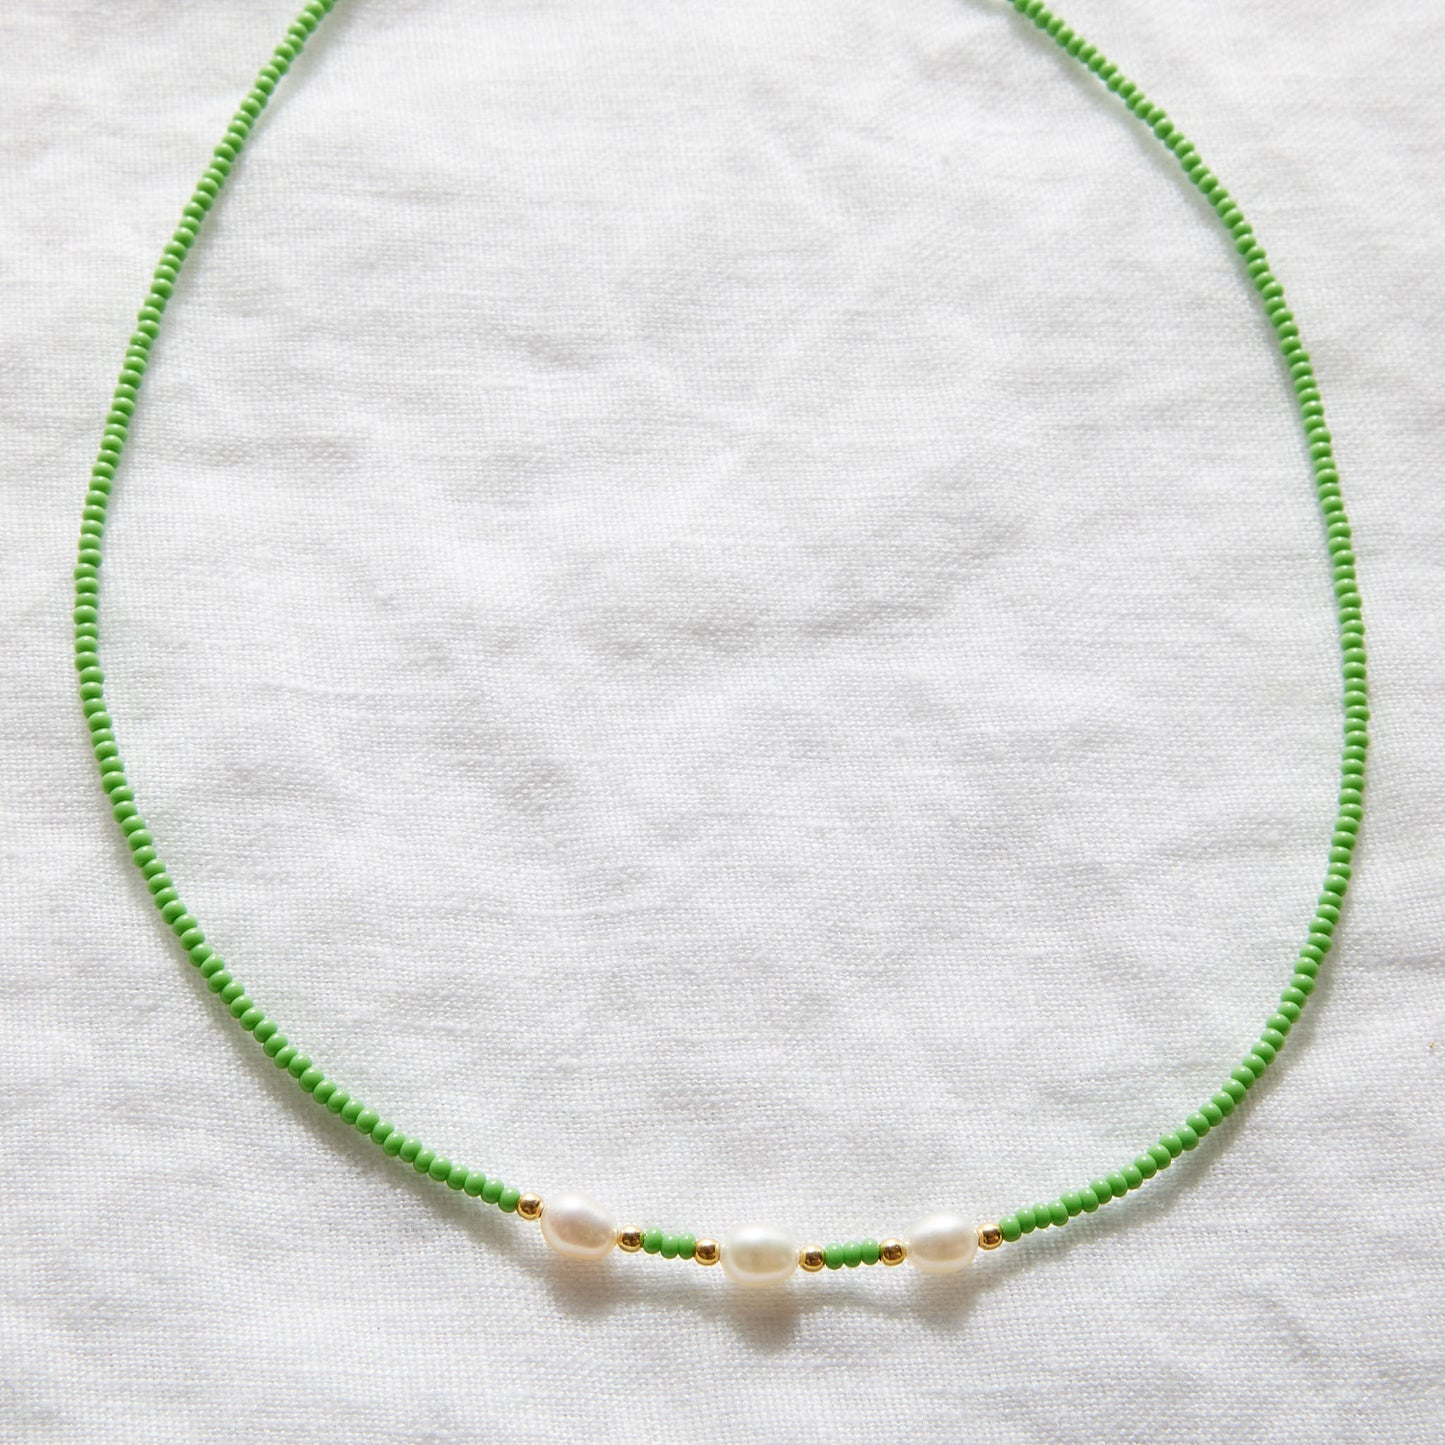 Collier de perles vert menthe avec perles d'eau douce